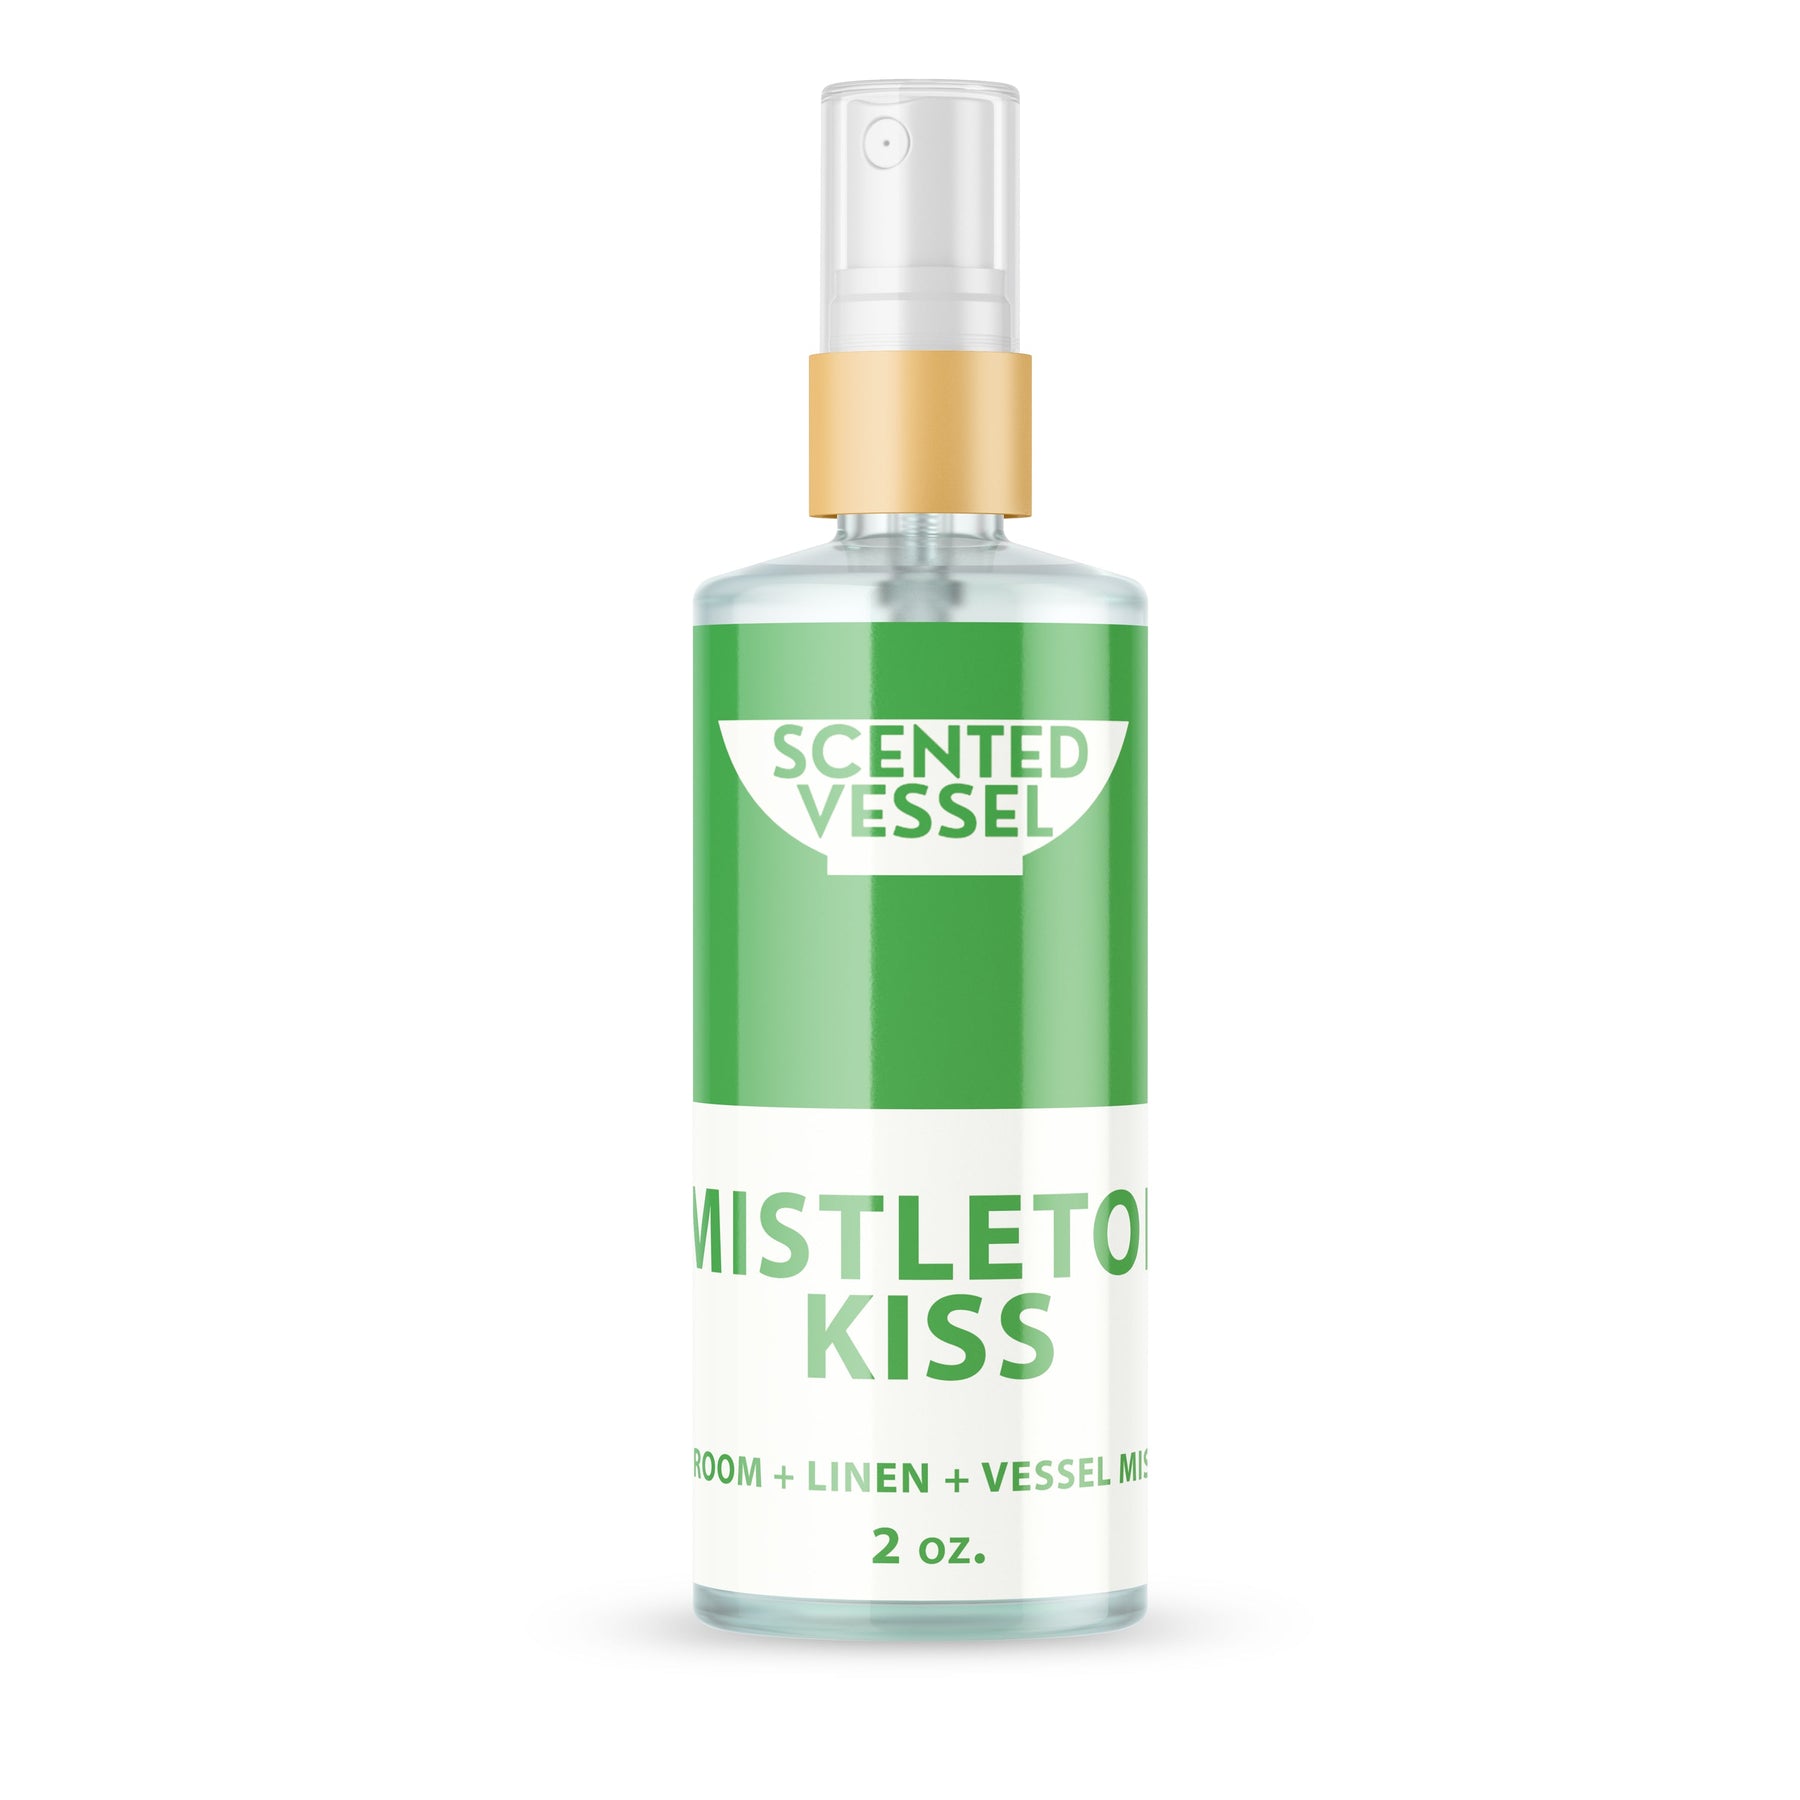 Mistletoe Kiss 2oz Fragrance Mist by Scented Vessel